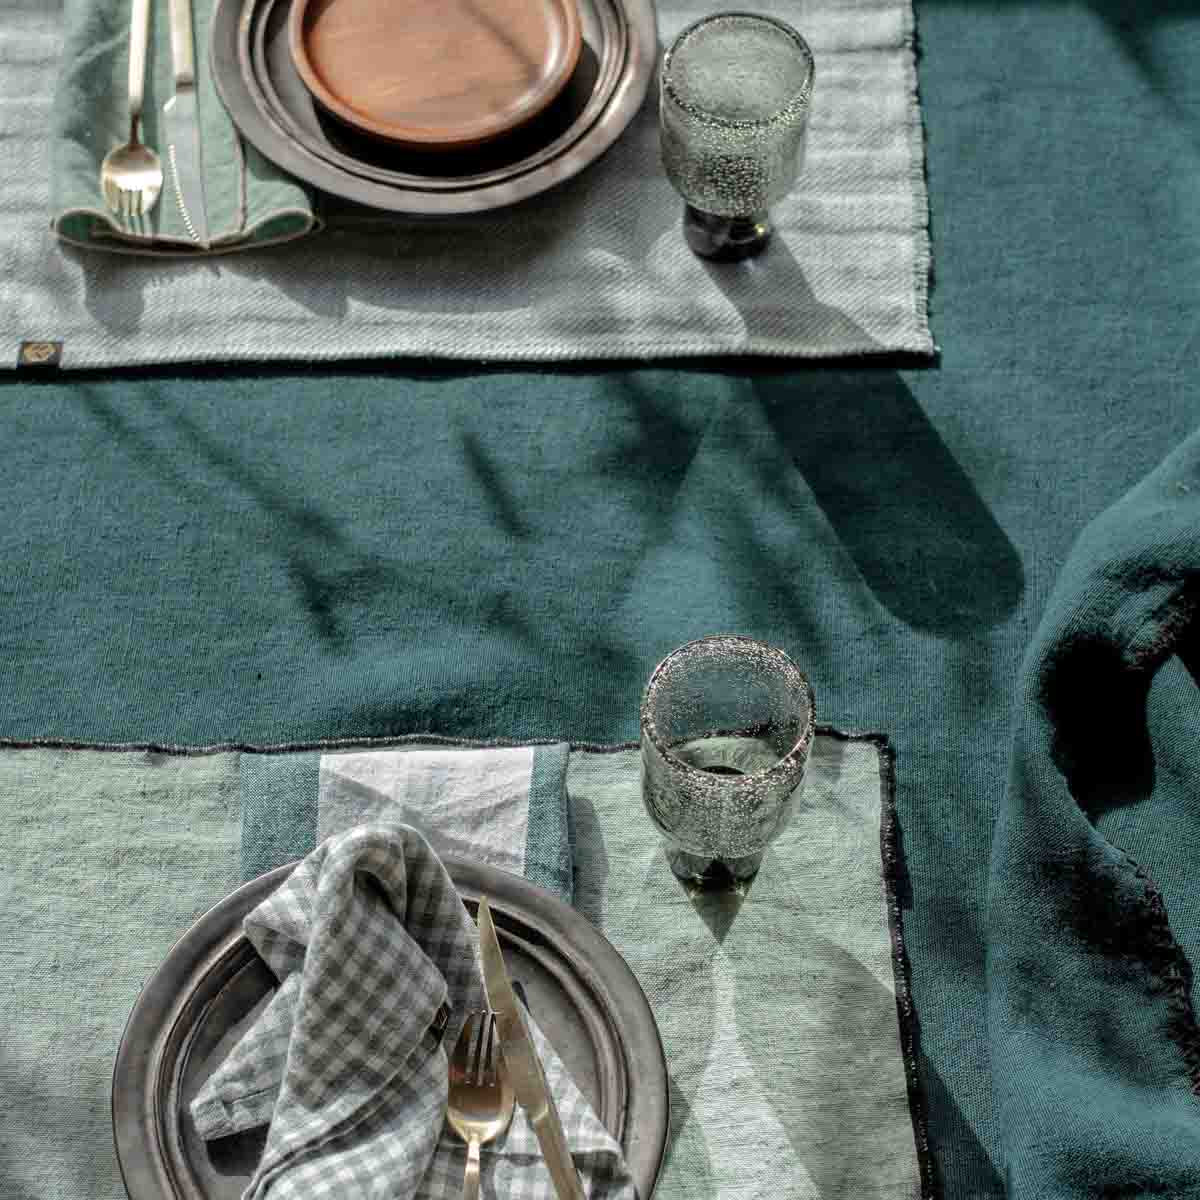 Venice washed linen tablecloth 160x300 cm - Harmony Haomy